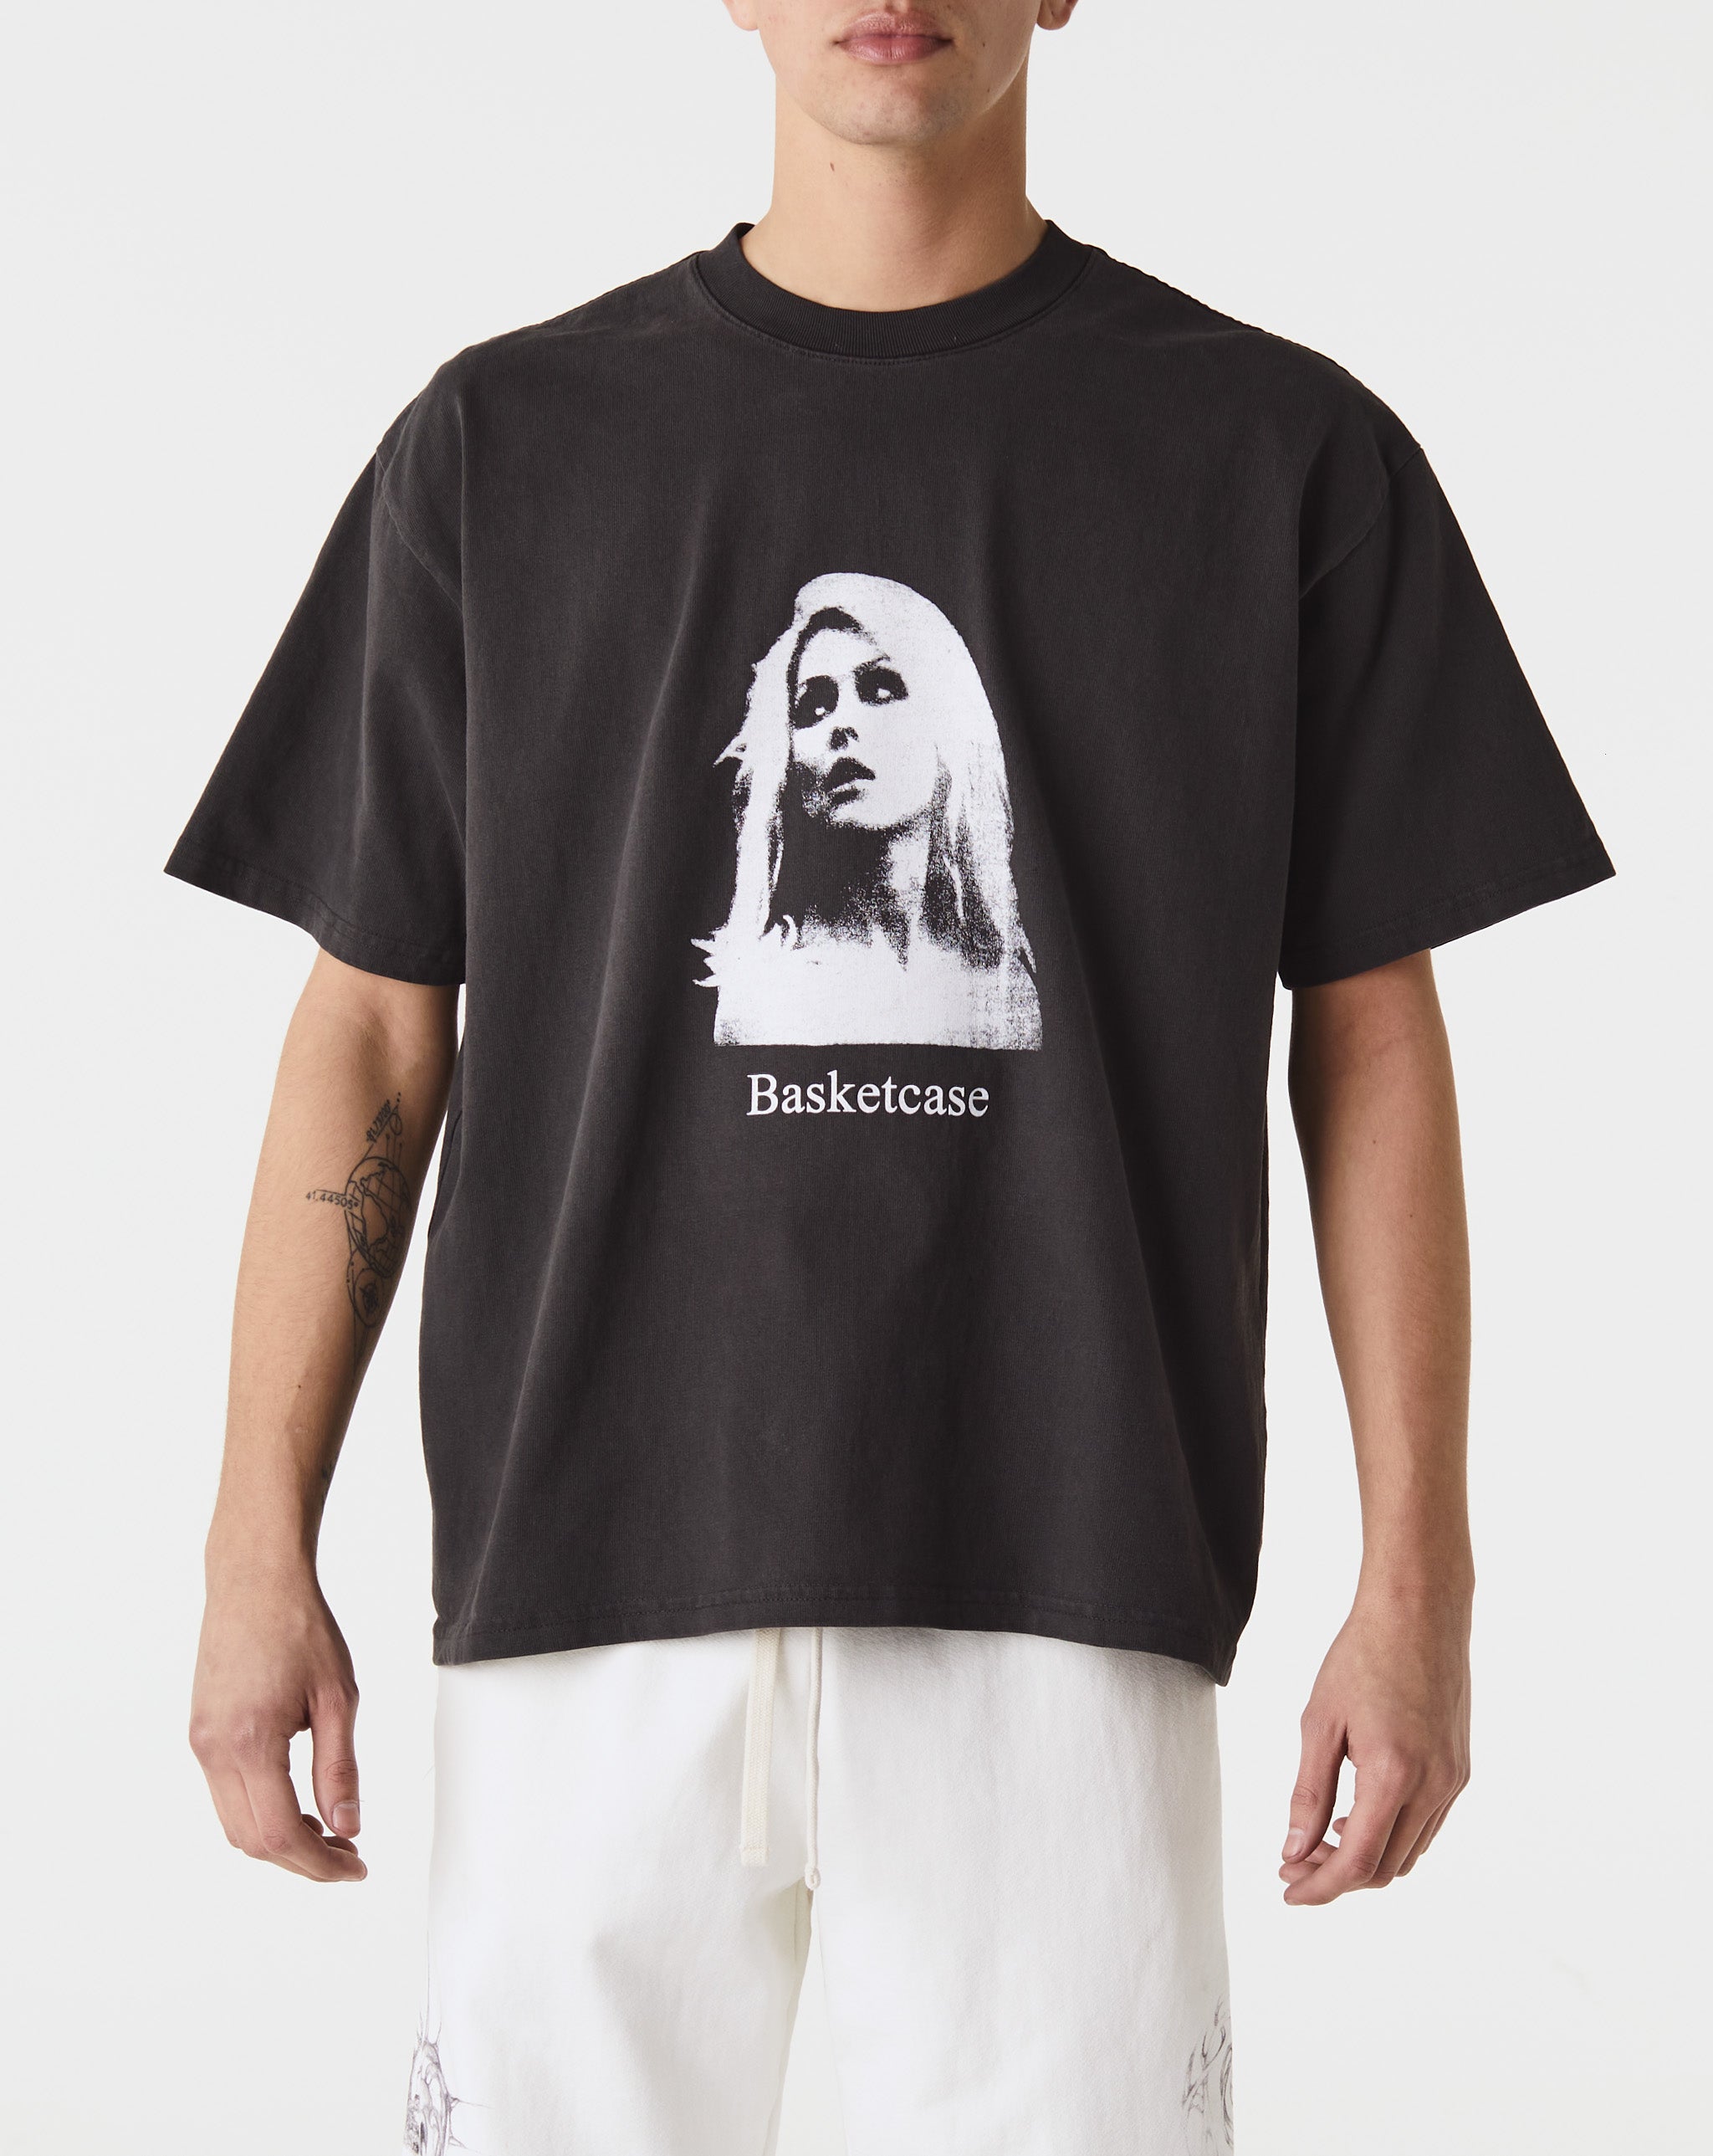 Basketcase Gallery Skin T-Shirt  - XHIBITION